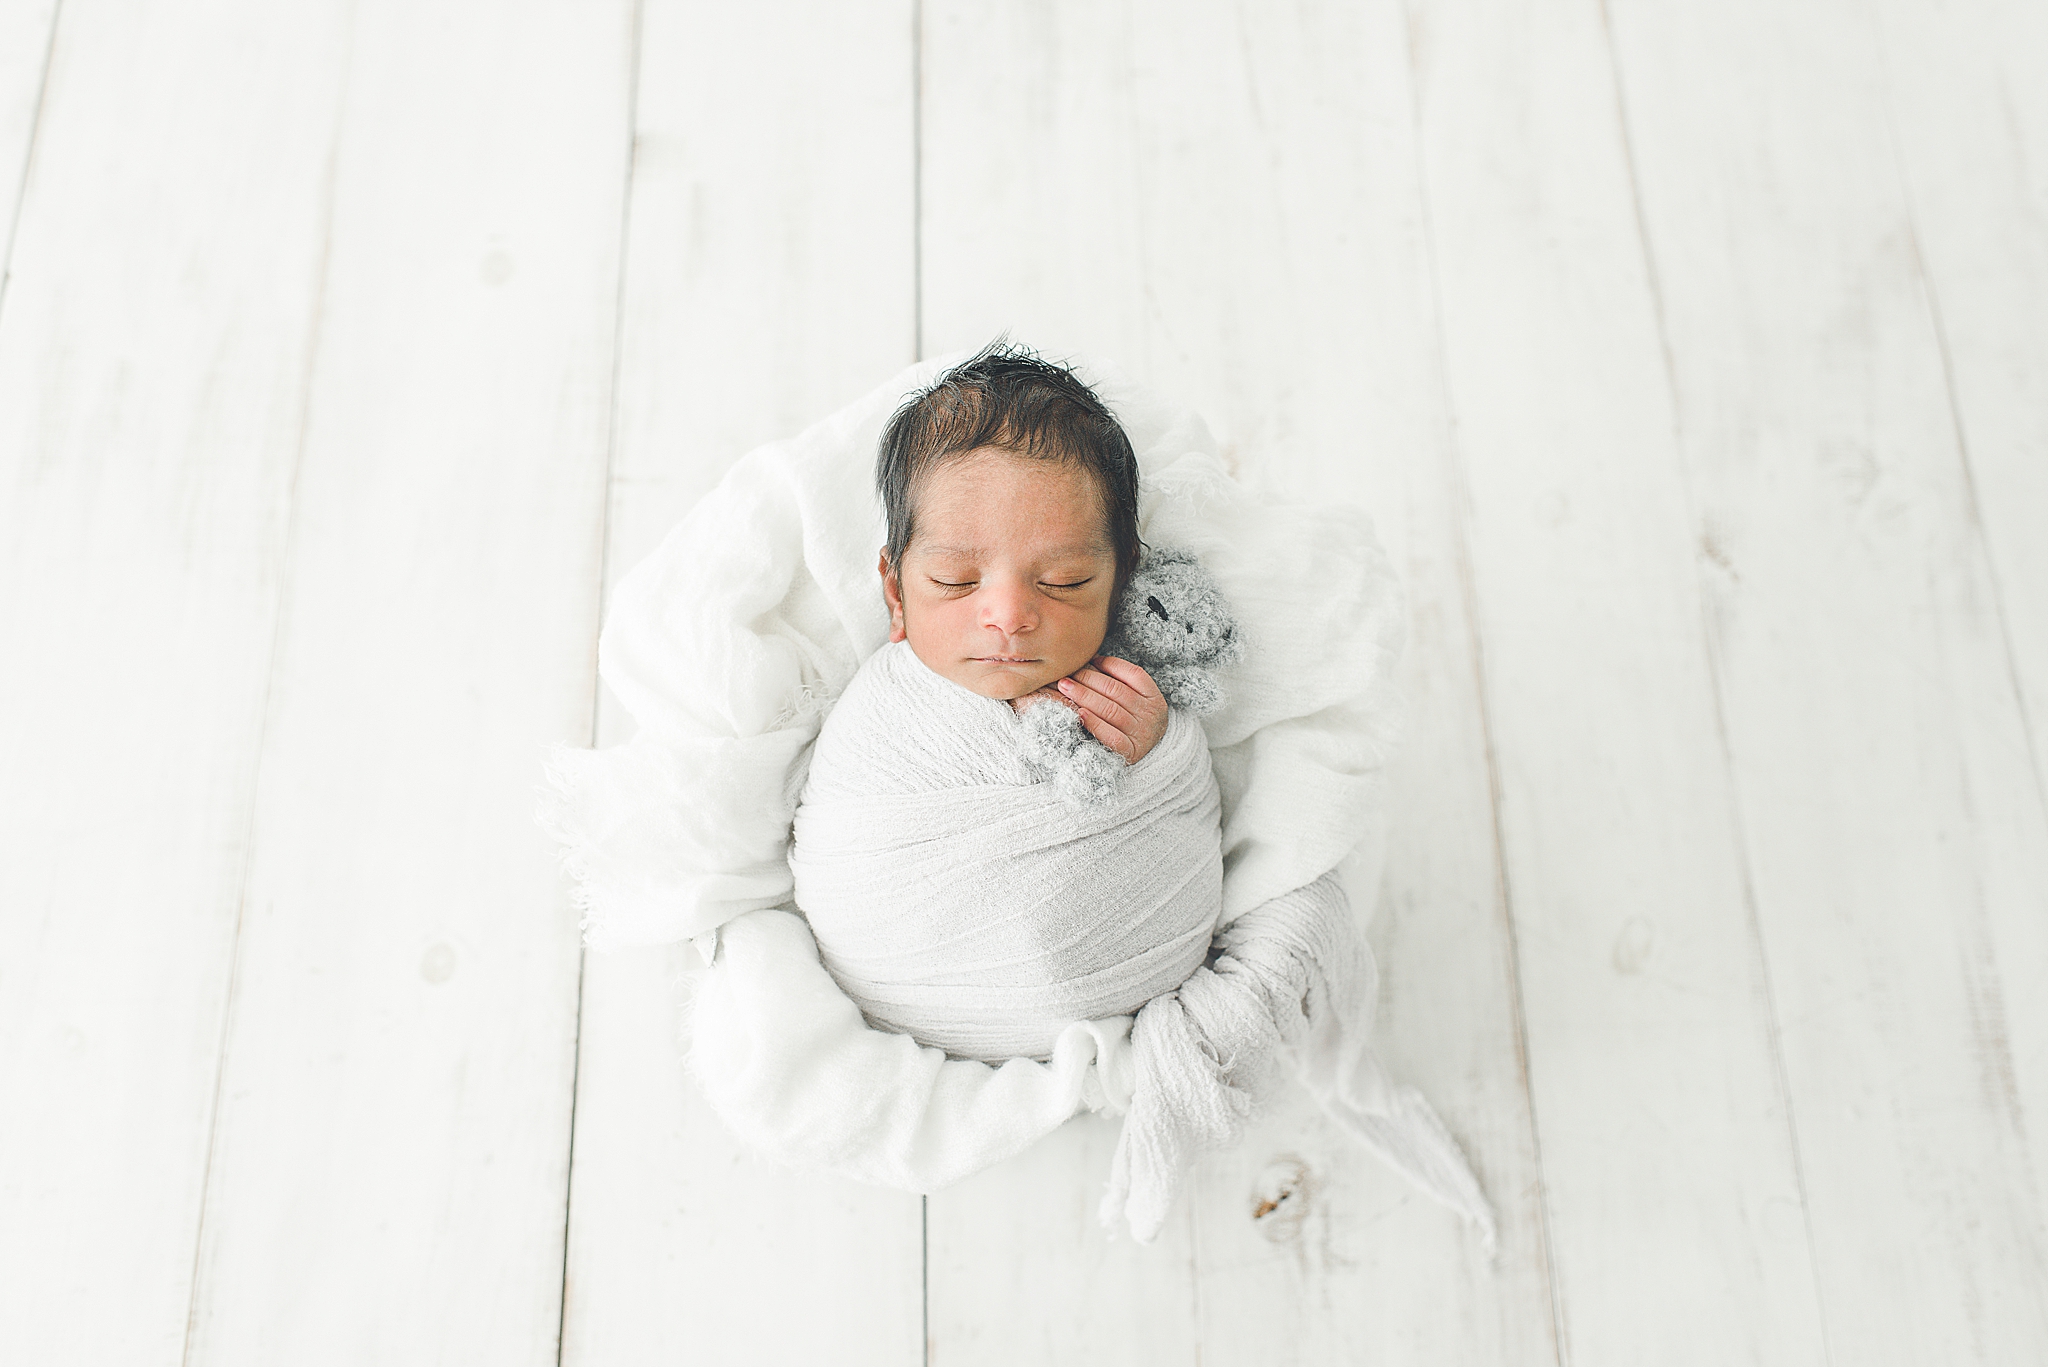 Kettering Newborn Photographer | Baby Advik